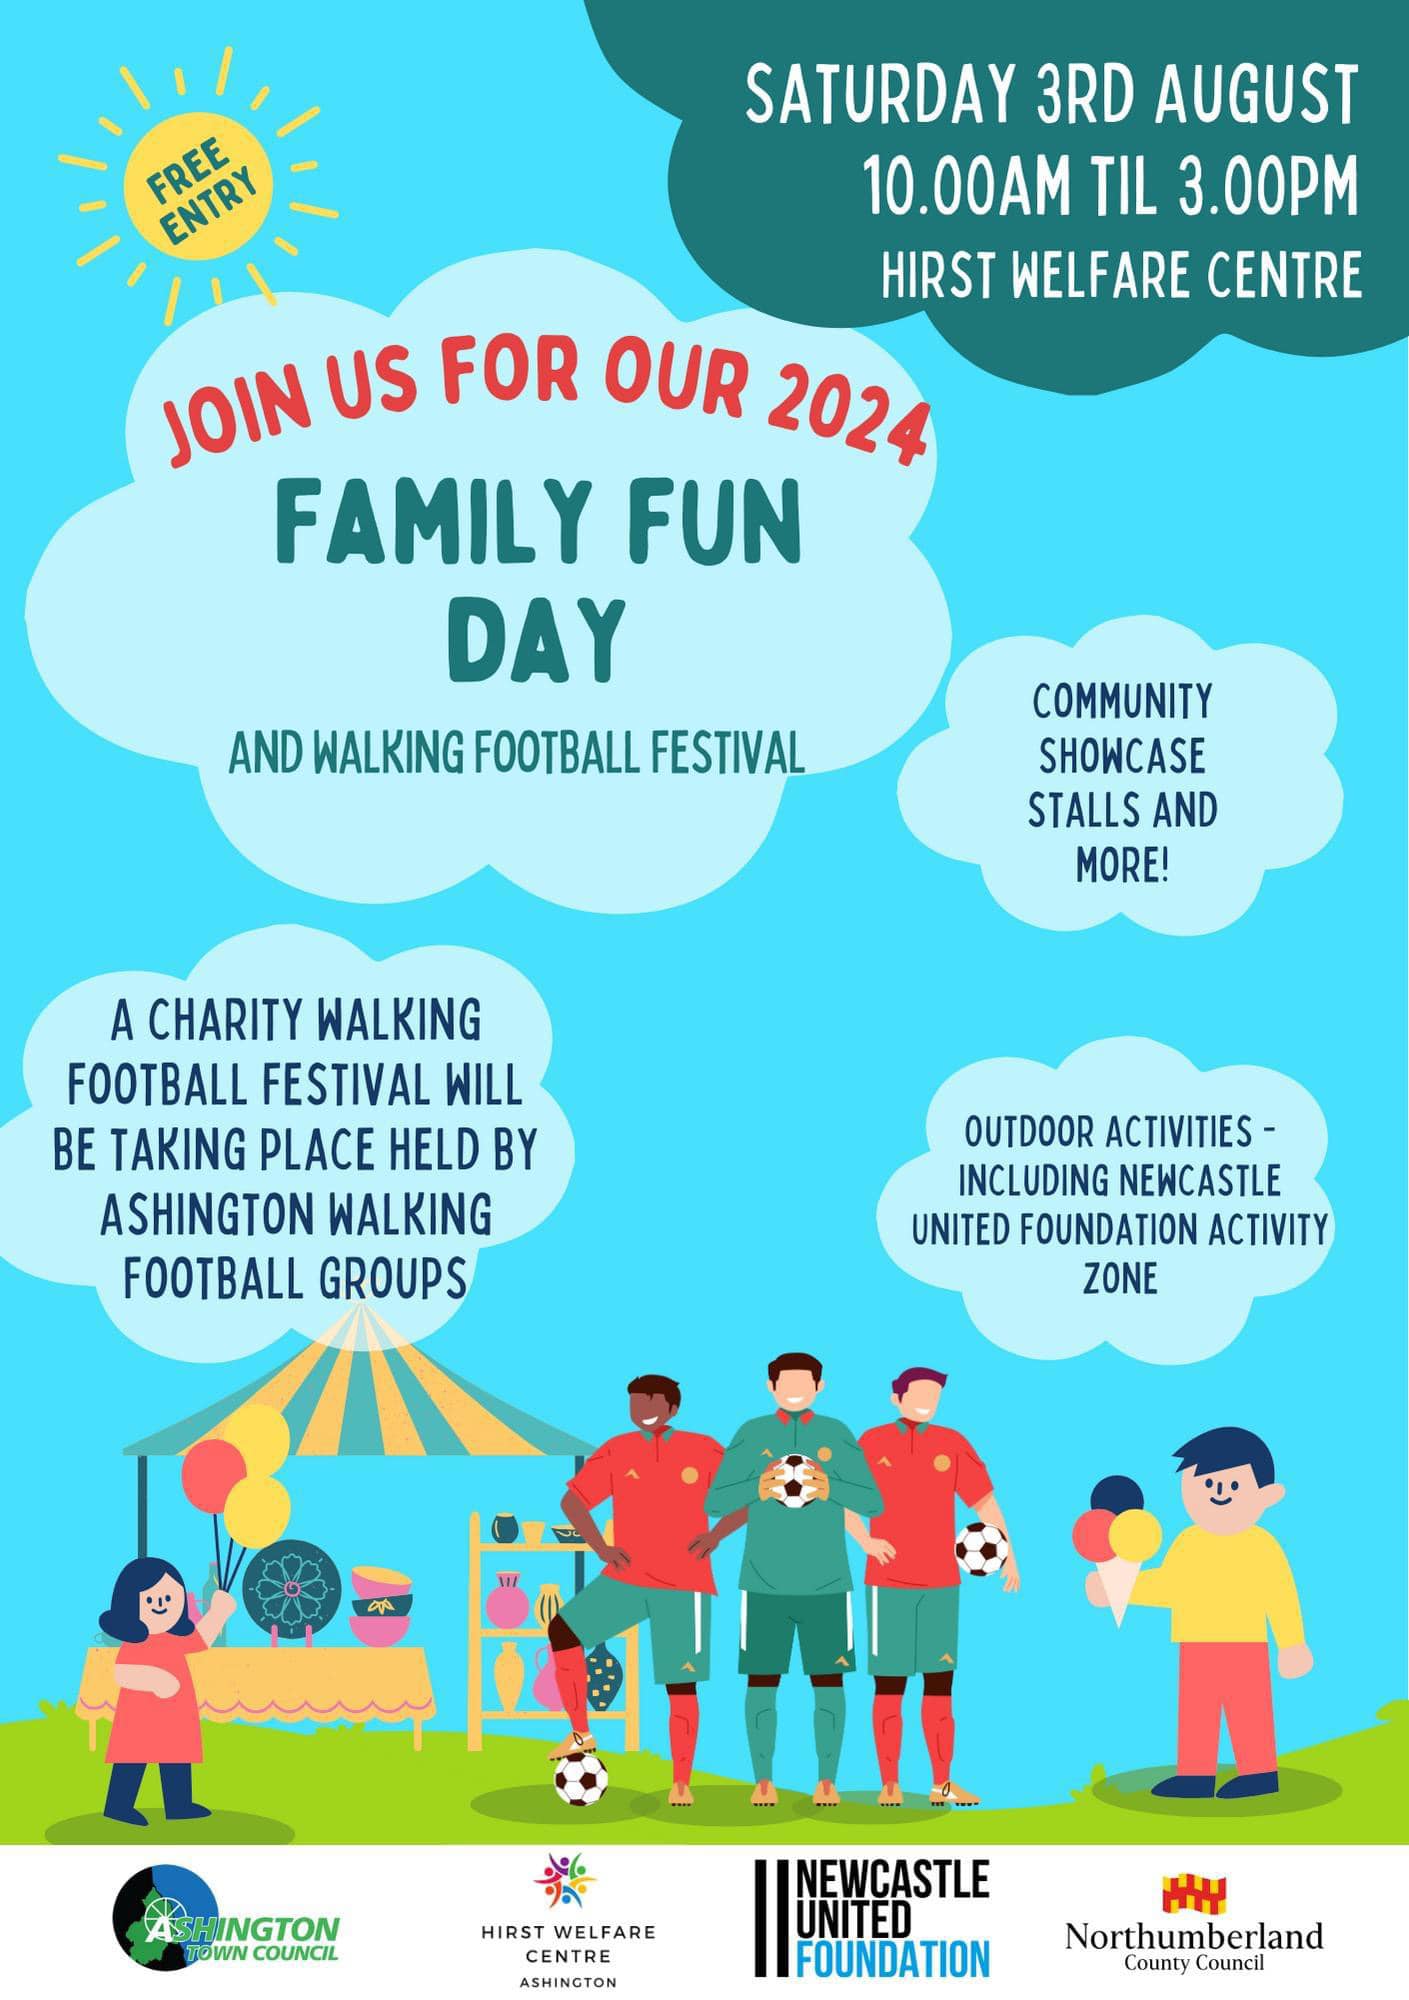 Ashington Hirst Welfare Centre to Host Family Fun Day and Walking Football Festival